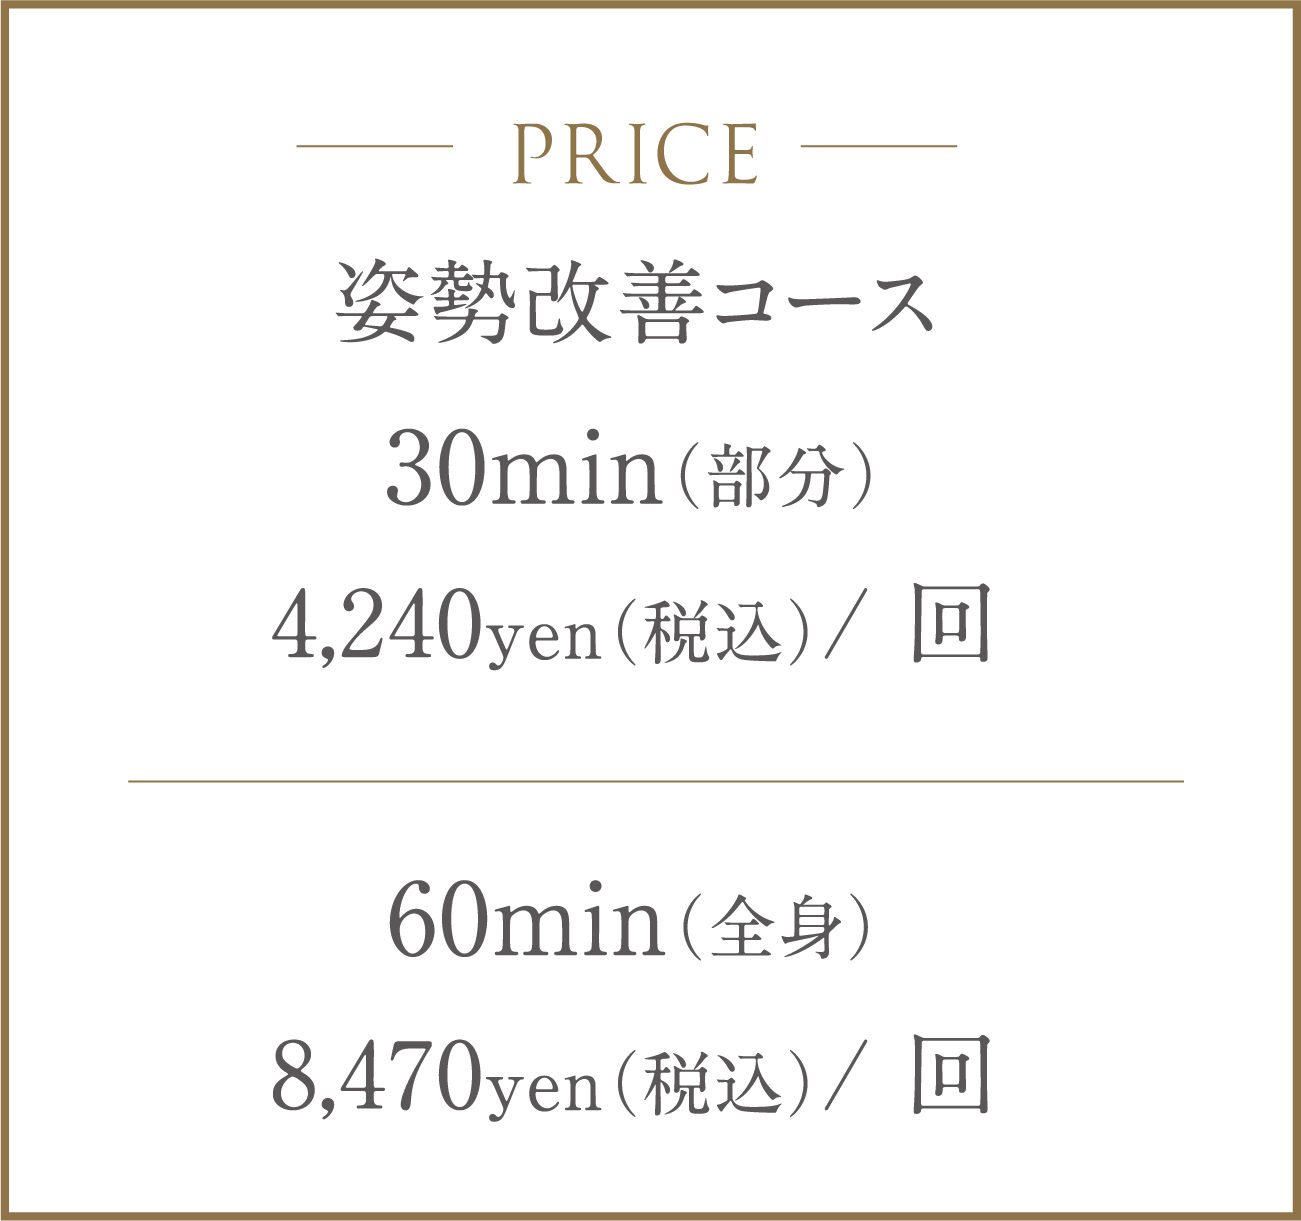 Price:姿勢改善コース30min（部分）4,240yen（税込）/ 回 60min（全身）8,470yen（税込）/ 回